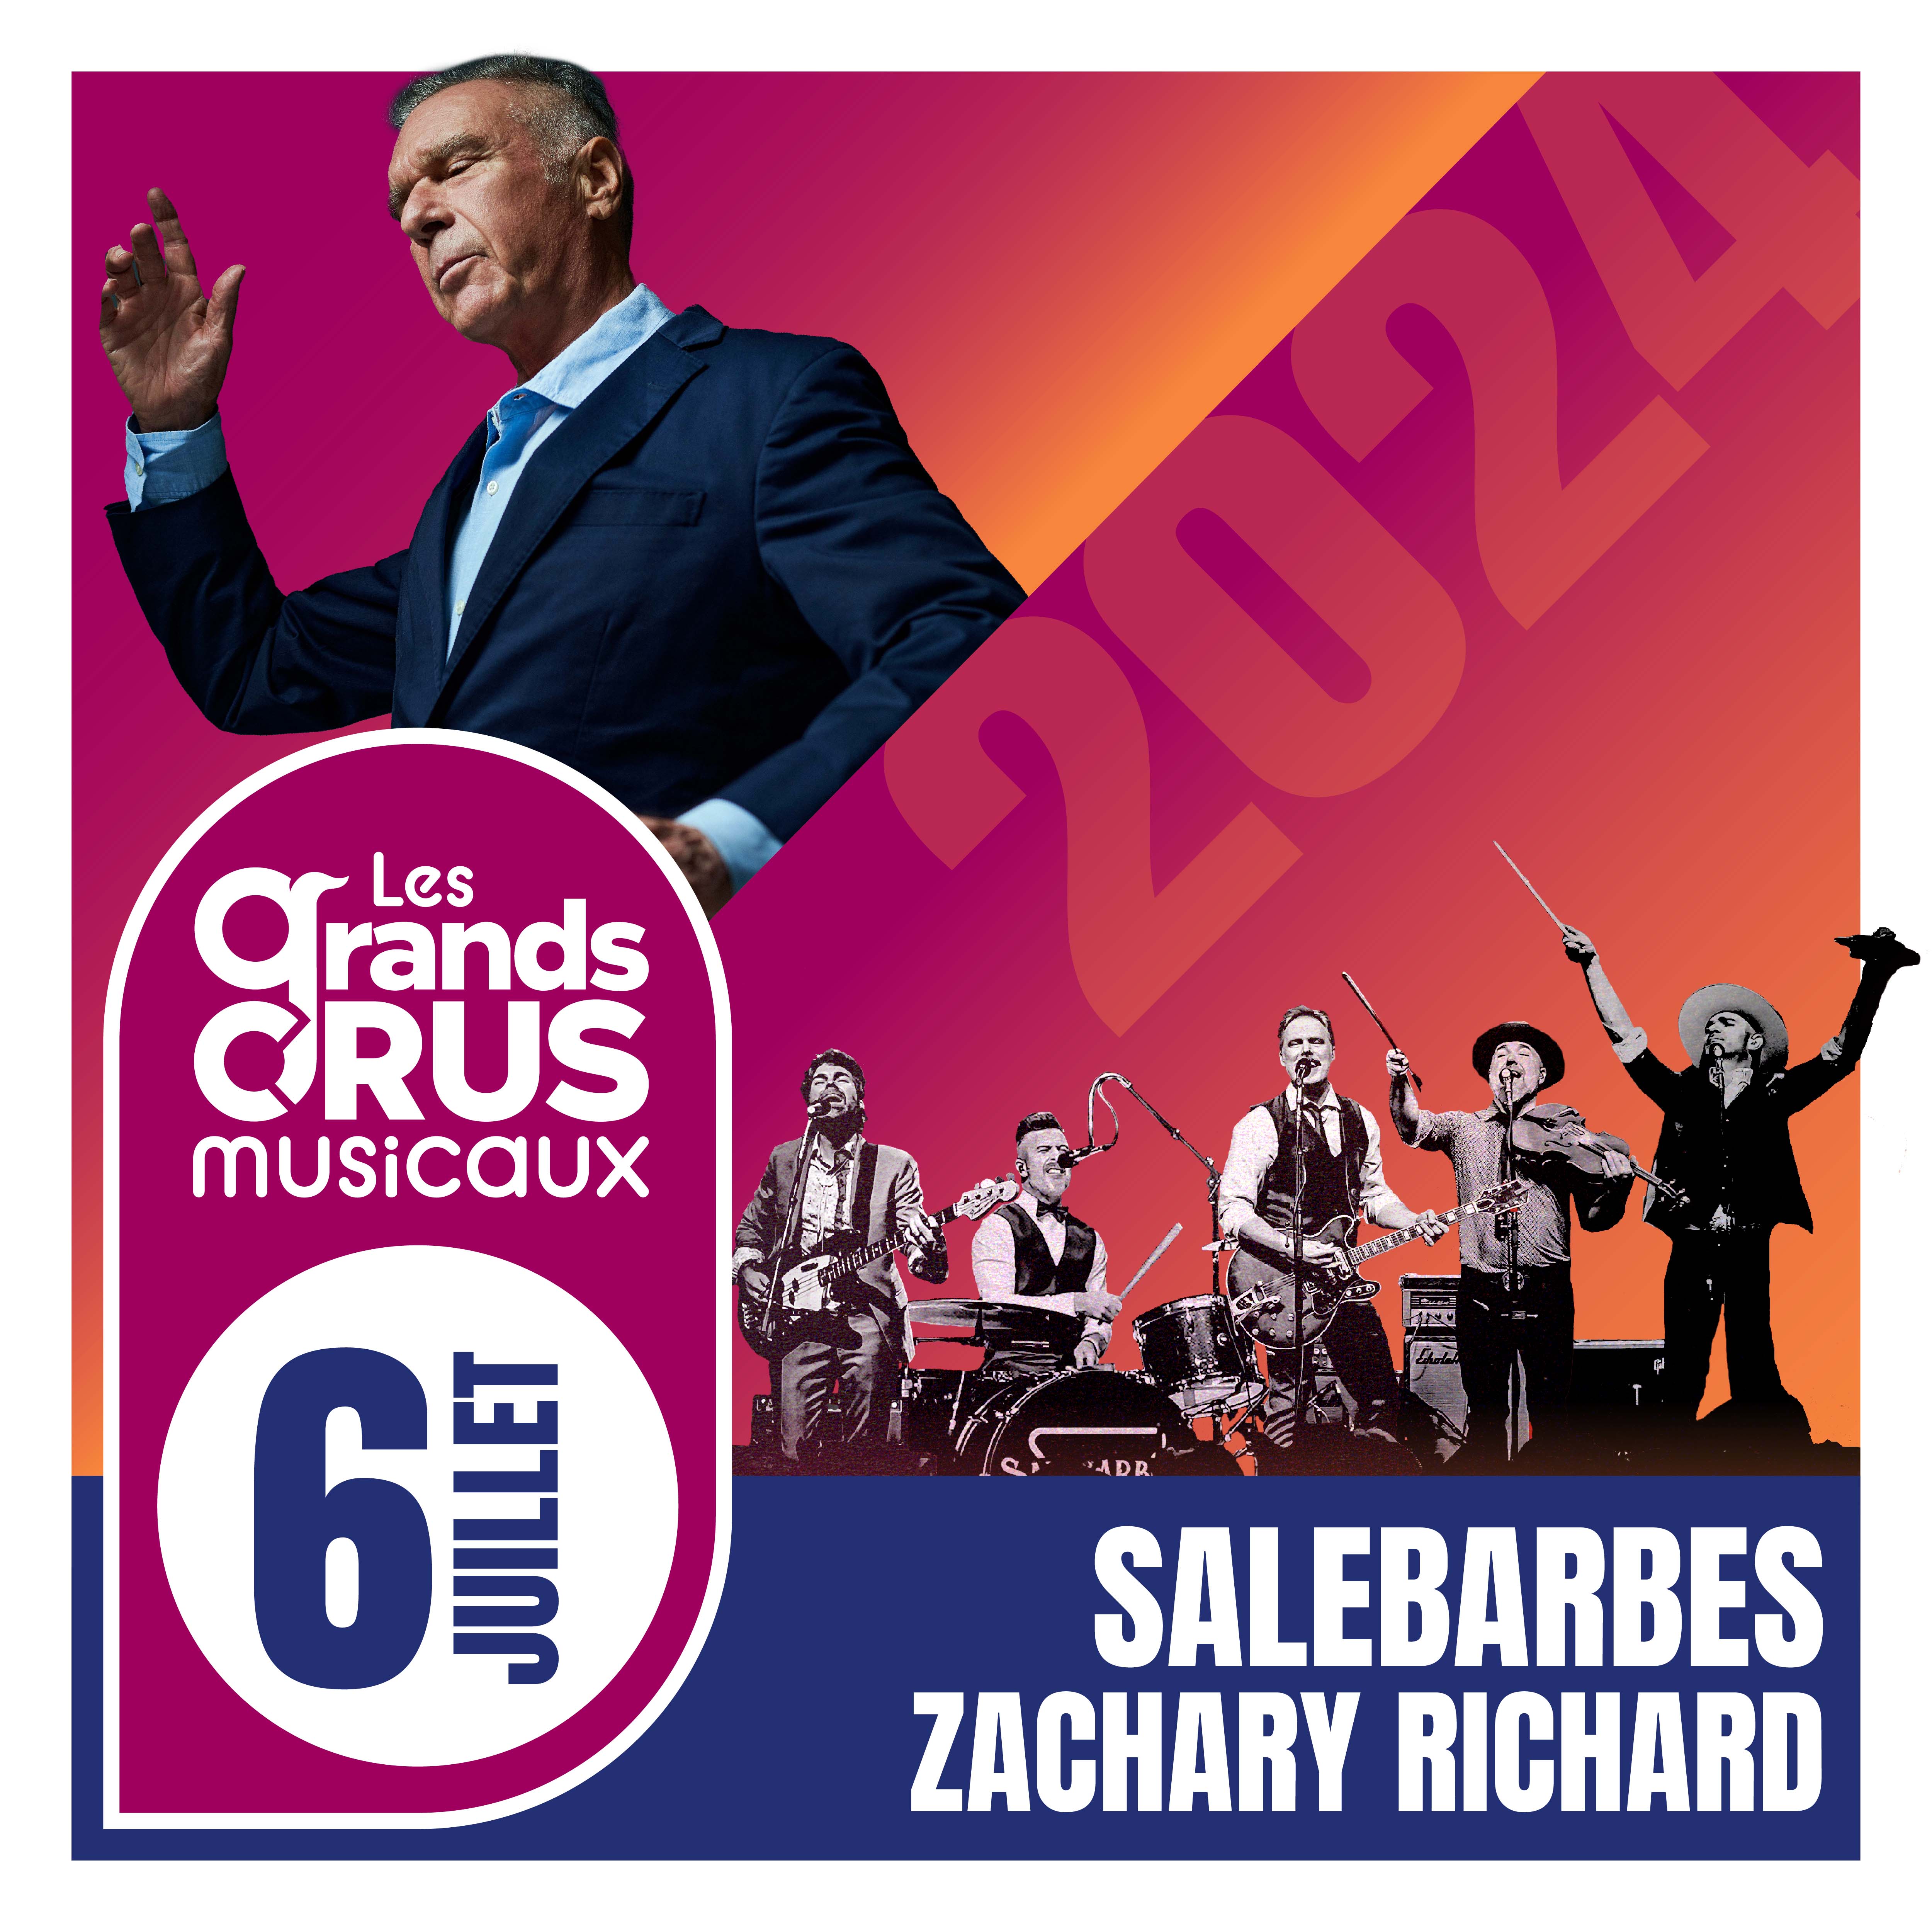 SALEBARBES | ZACHARY RICHARD - Les grands crus musicaux